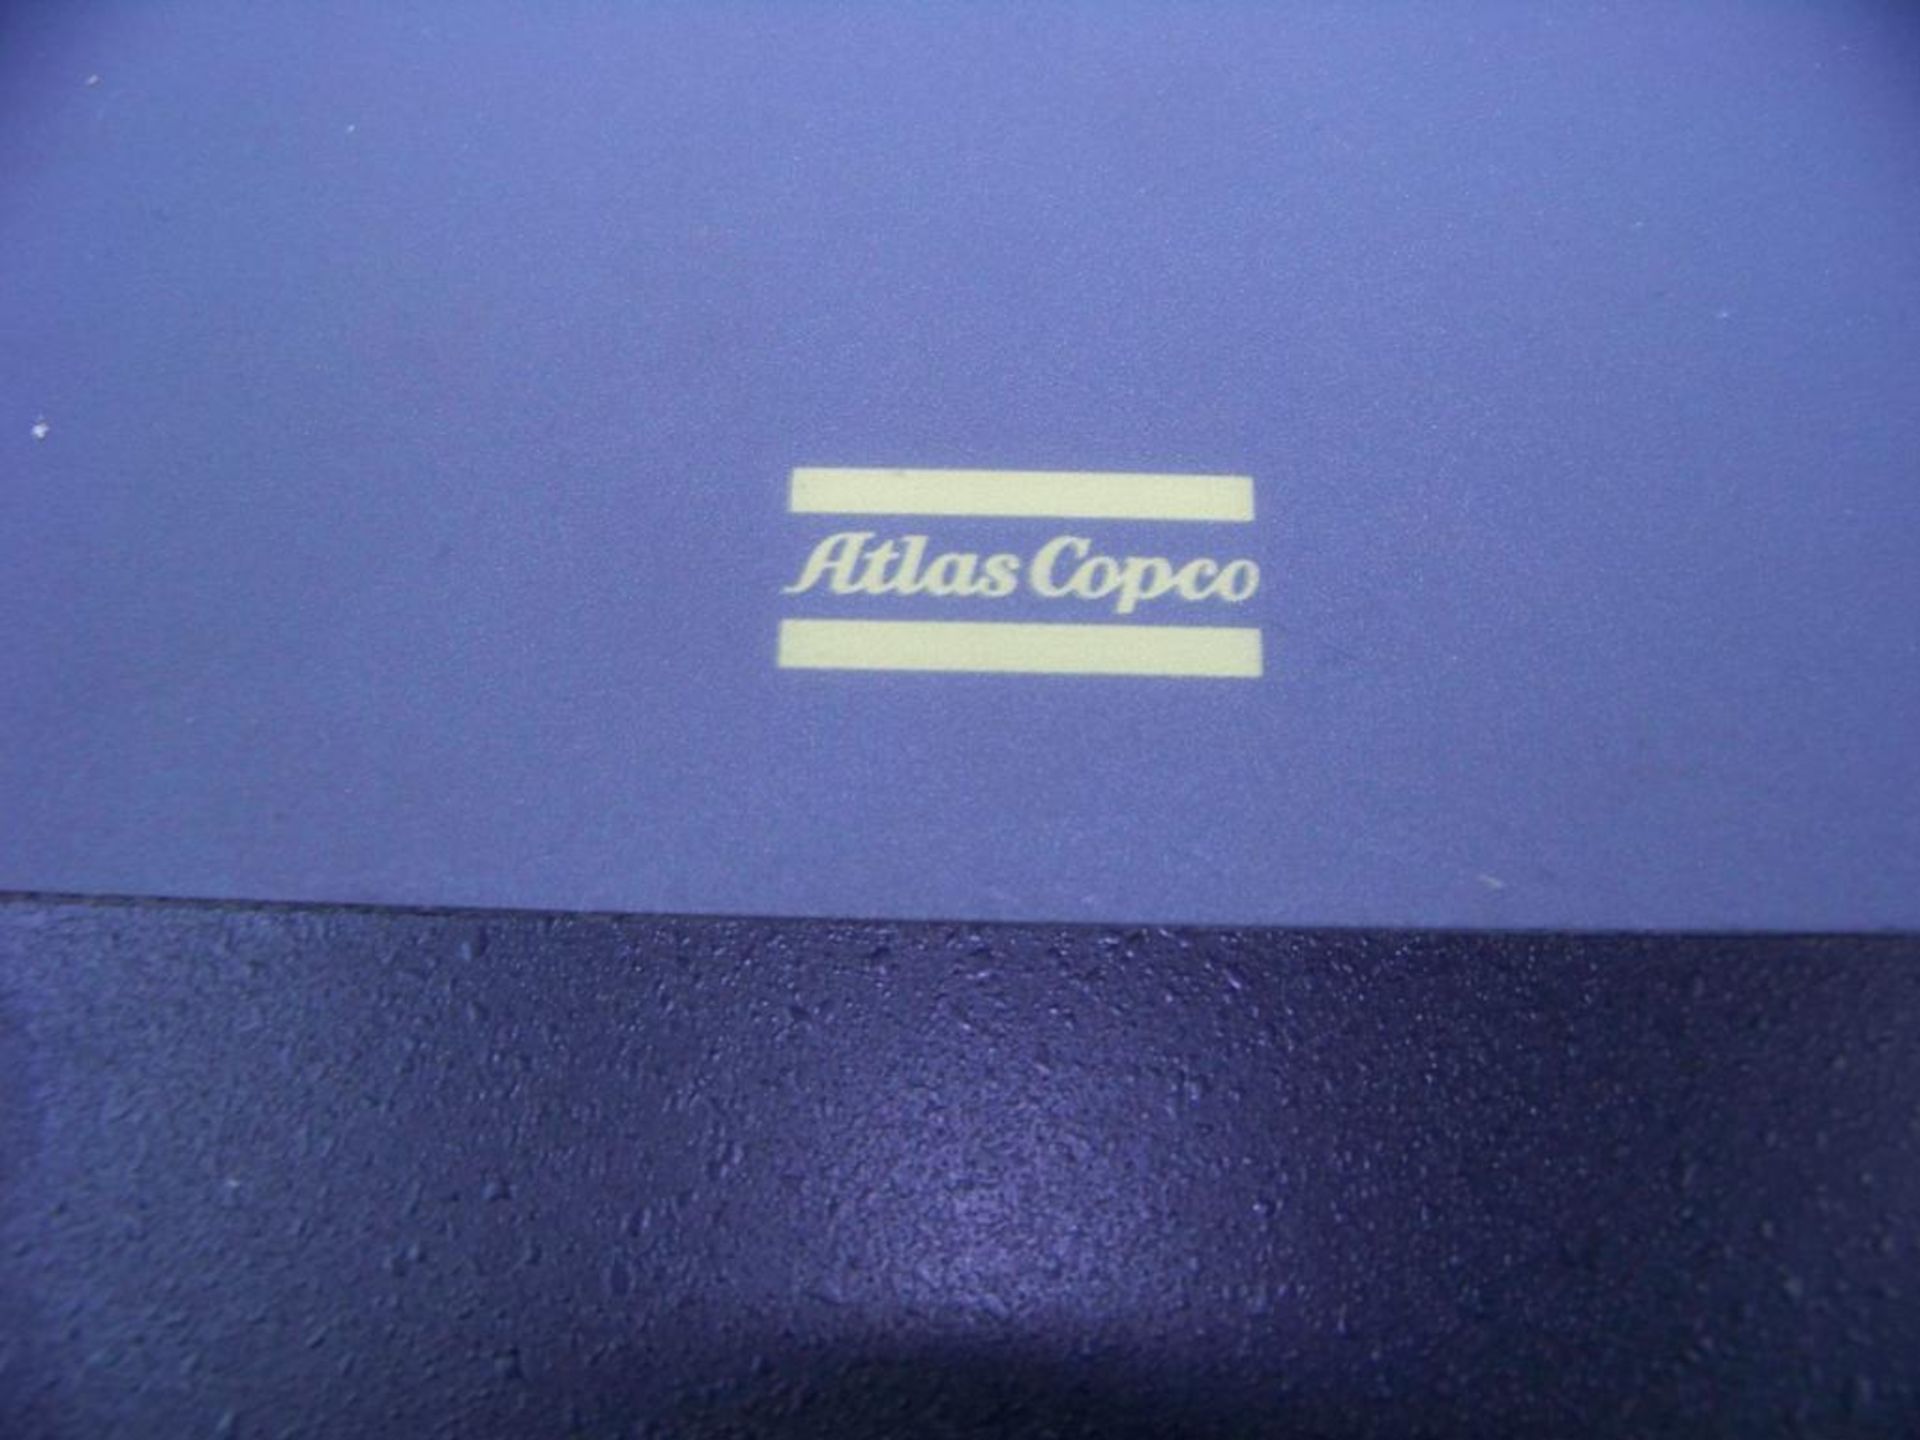 ATLAS COPCO, POWER SUPPLY FOR 6CH POWER MAC, 30 AMP, 400V AC, # 9040-1202-03 - Image 4 of 4